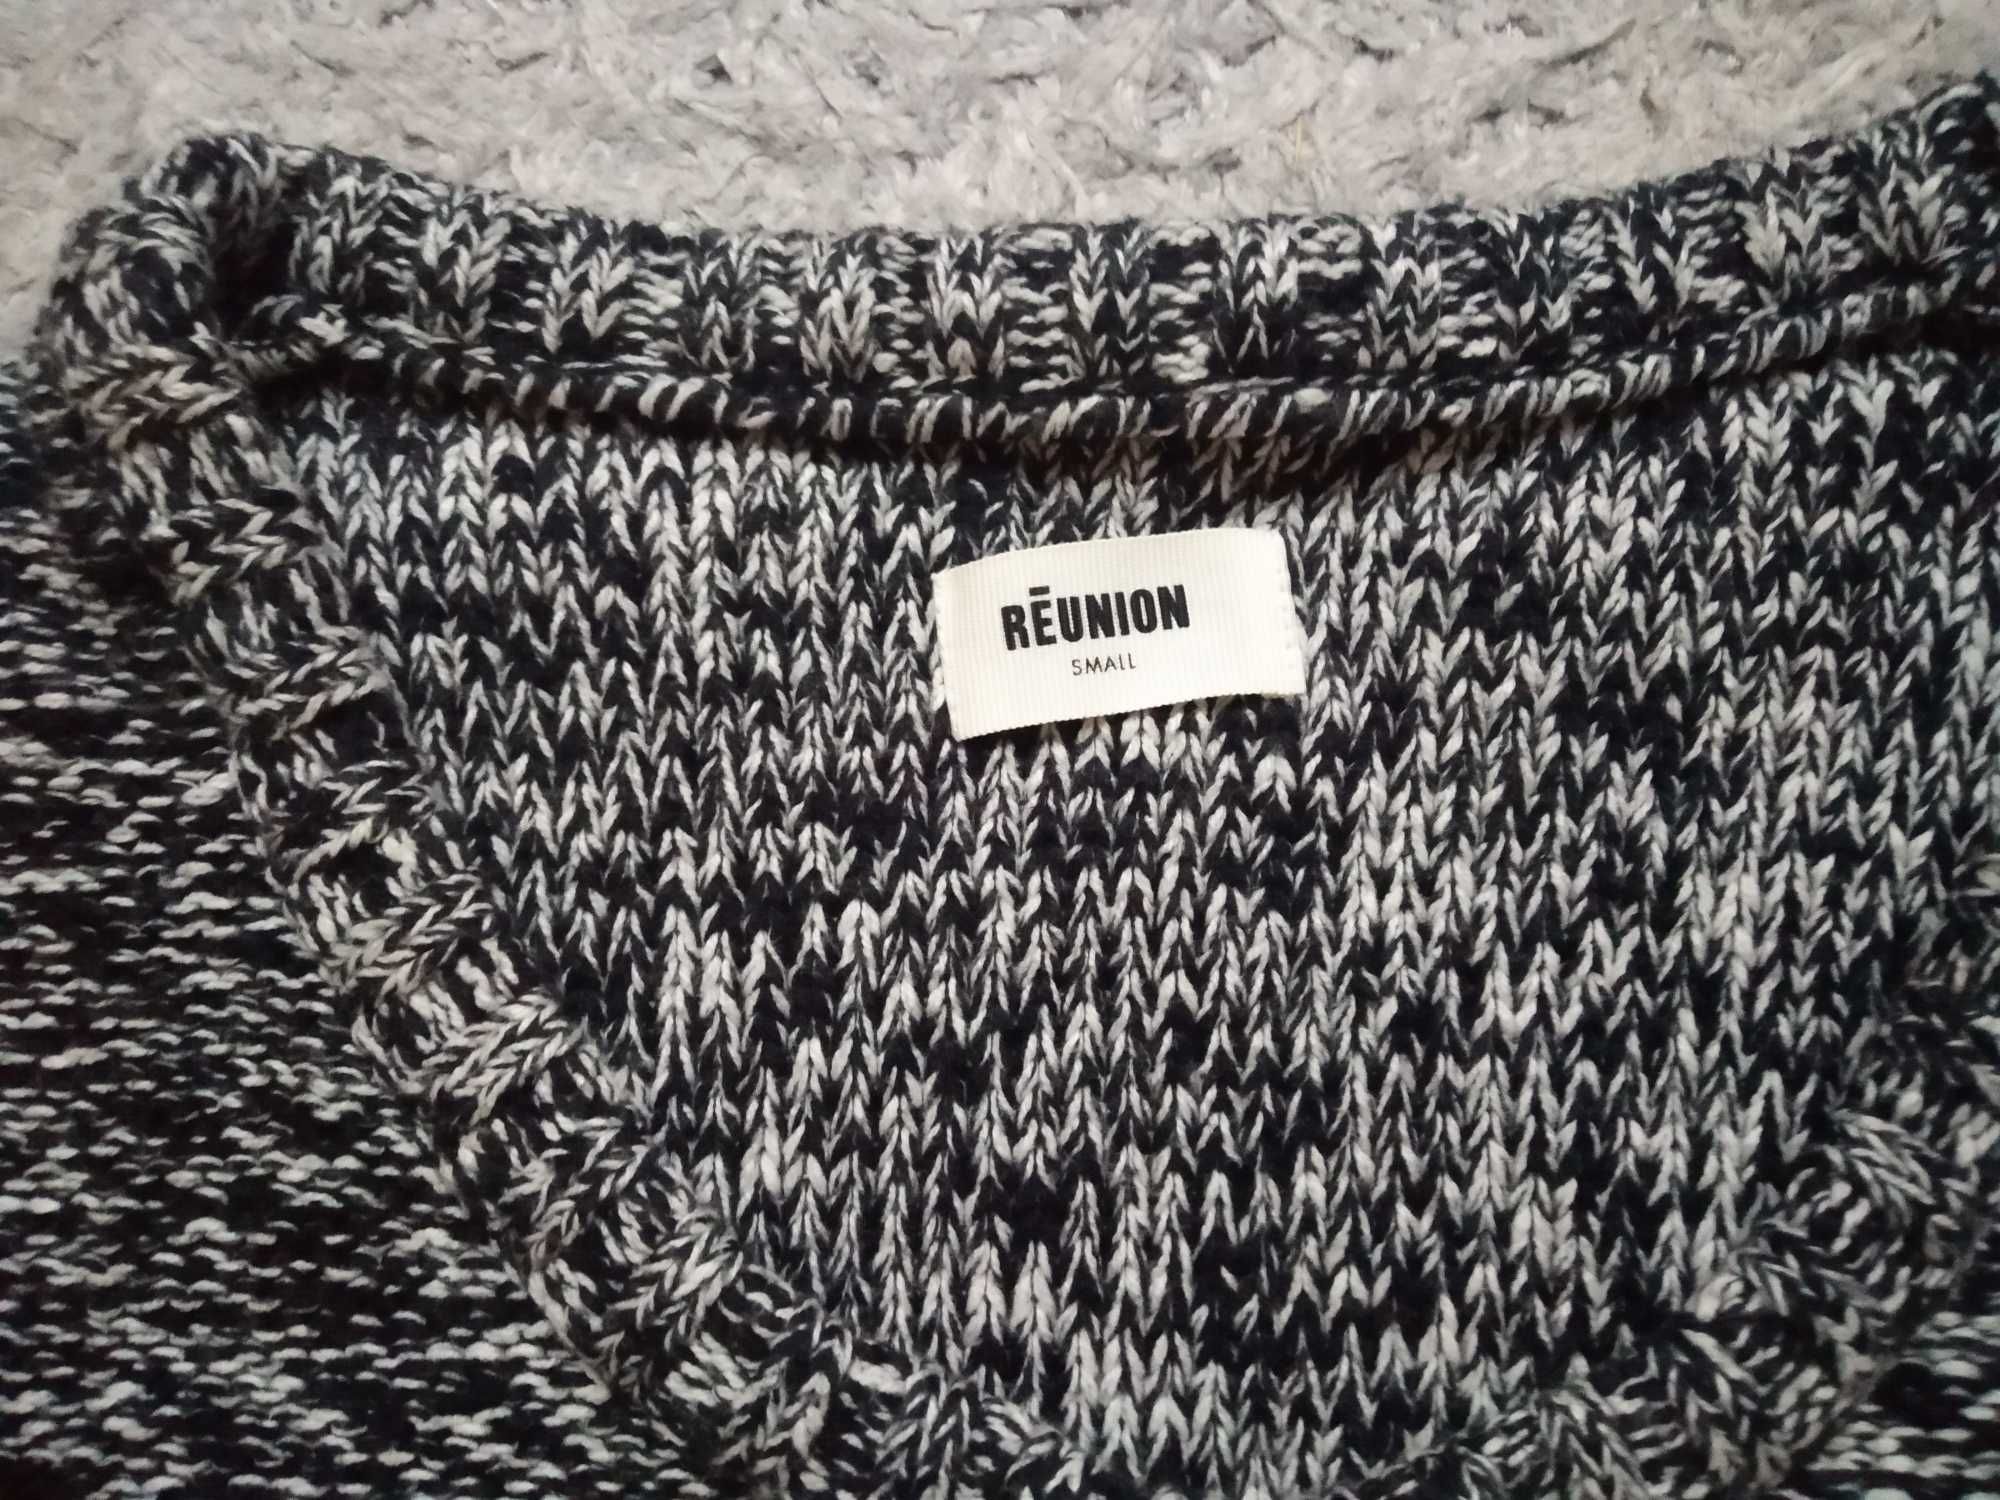 sweterek czarno/biały 38/40 L